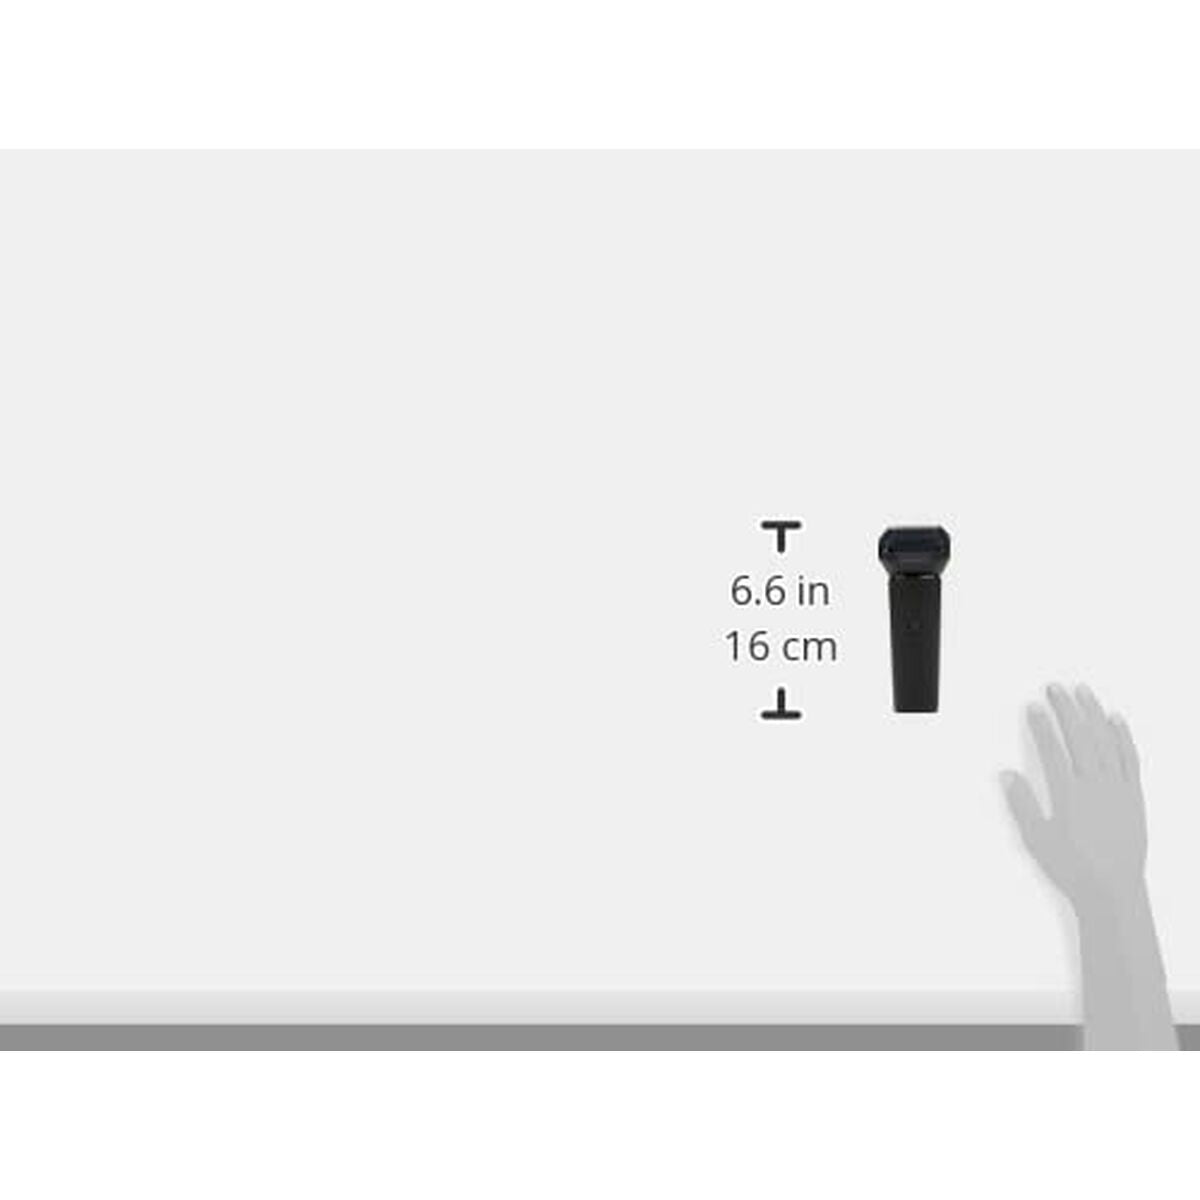 Kaufe Nassrasierer Xiaomi Mi 5-Blade bei AWK Flagship um € 119.00